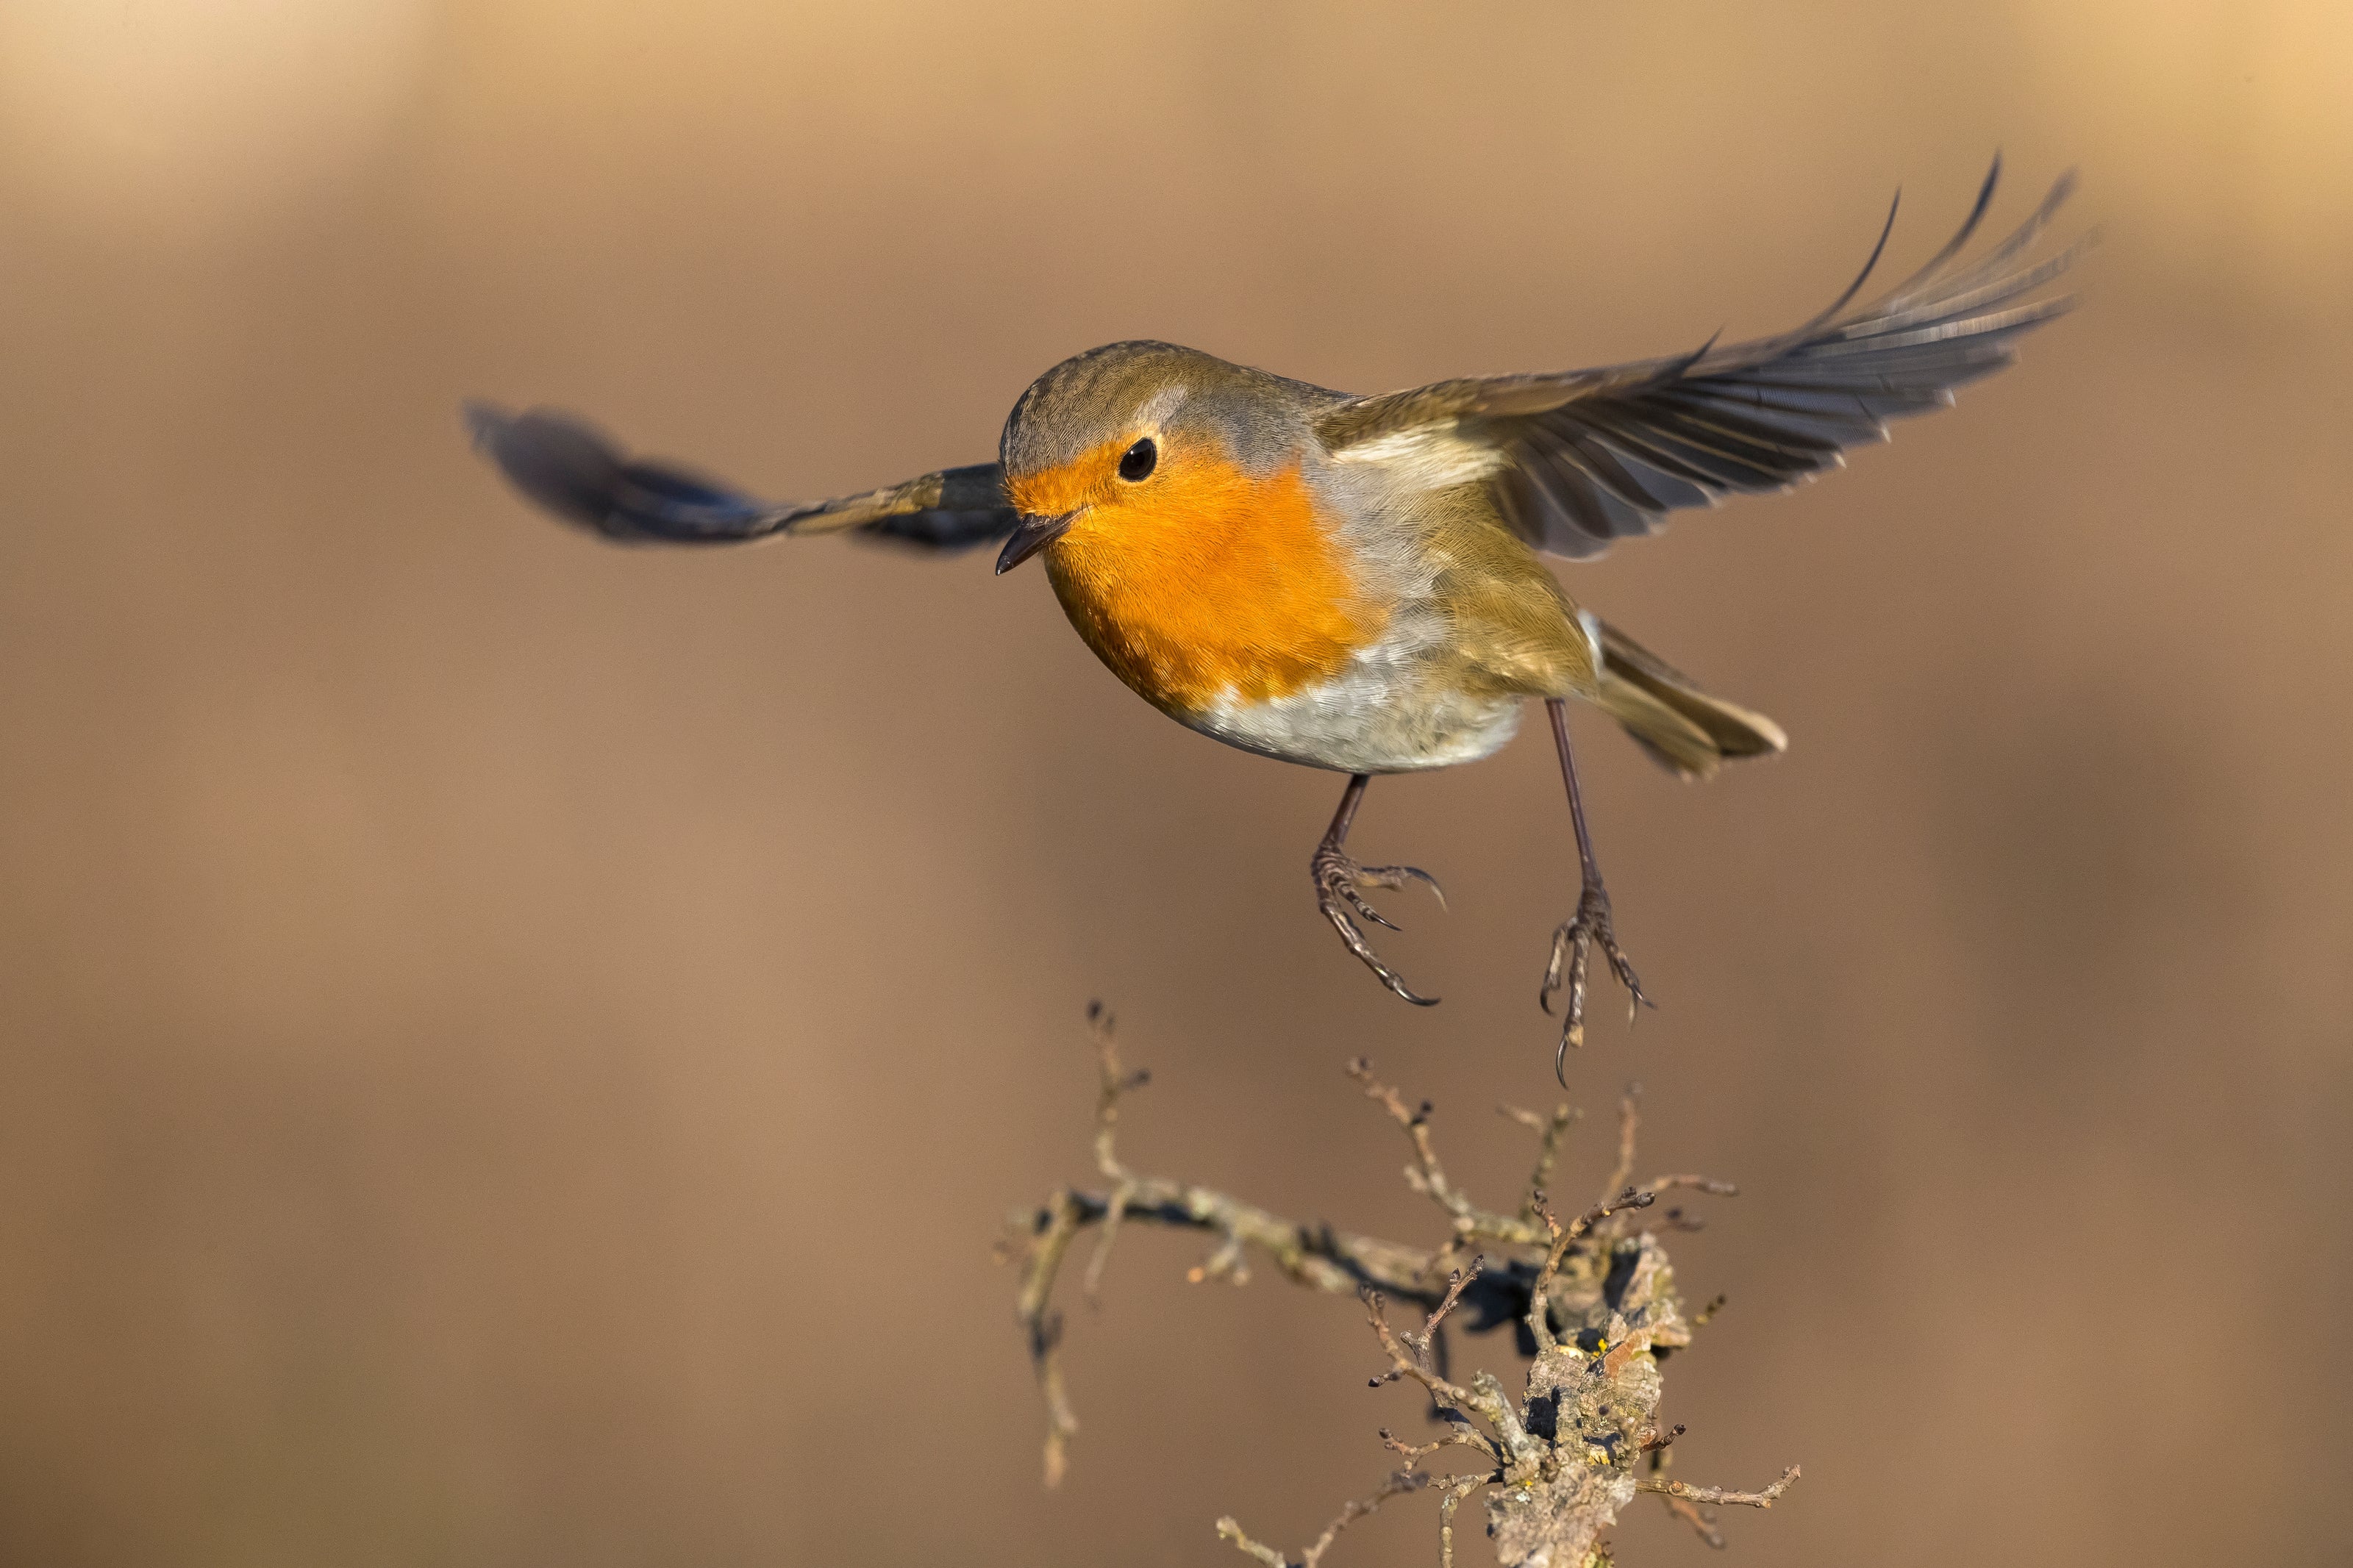 European Robin landing near its nest